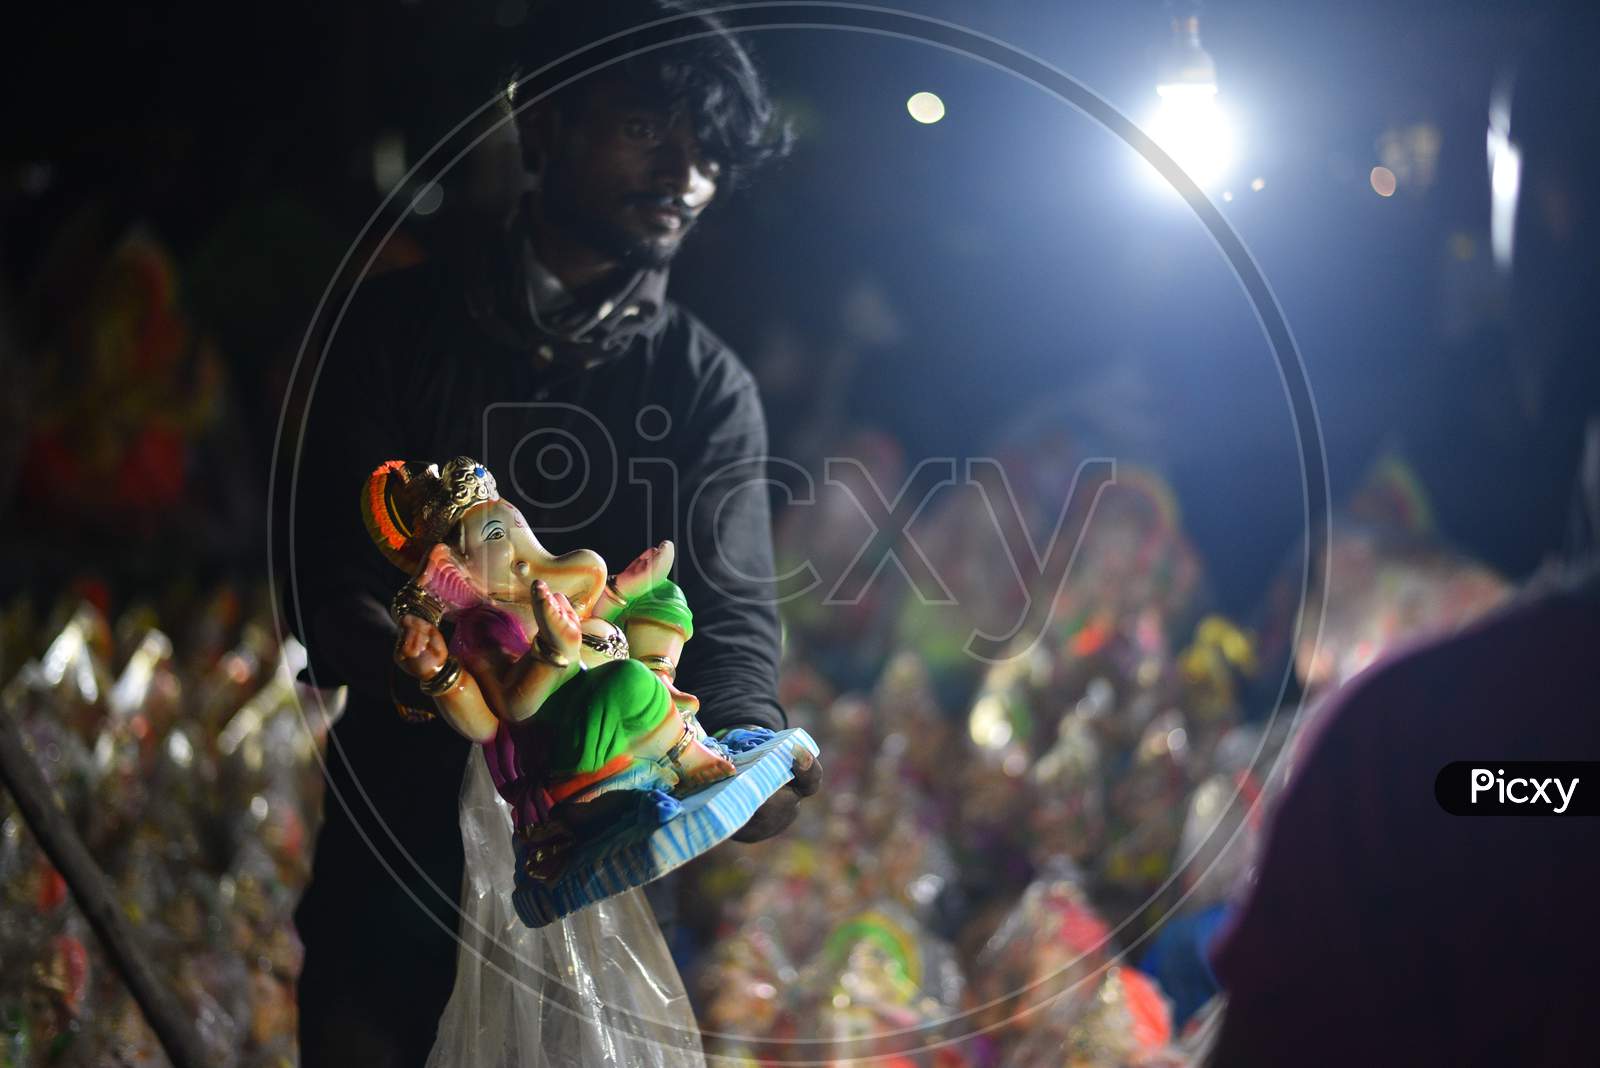 A vendor shows idols of hindu deity, Lord Ganesh ahead of Ganesh Chaturthi/ Vinayaka Chavithi festival in Hyderabad on August 21, 2020.